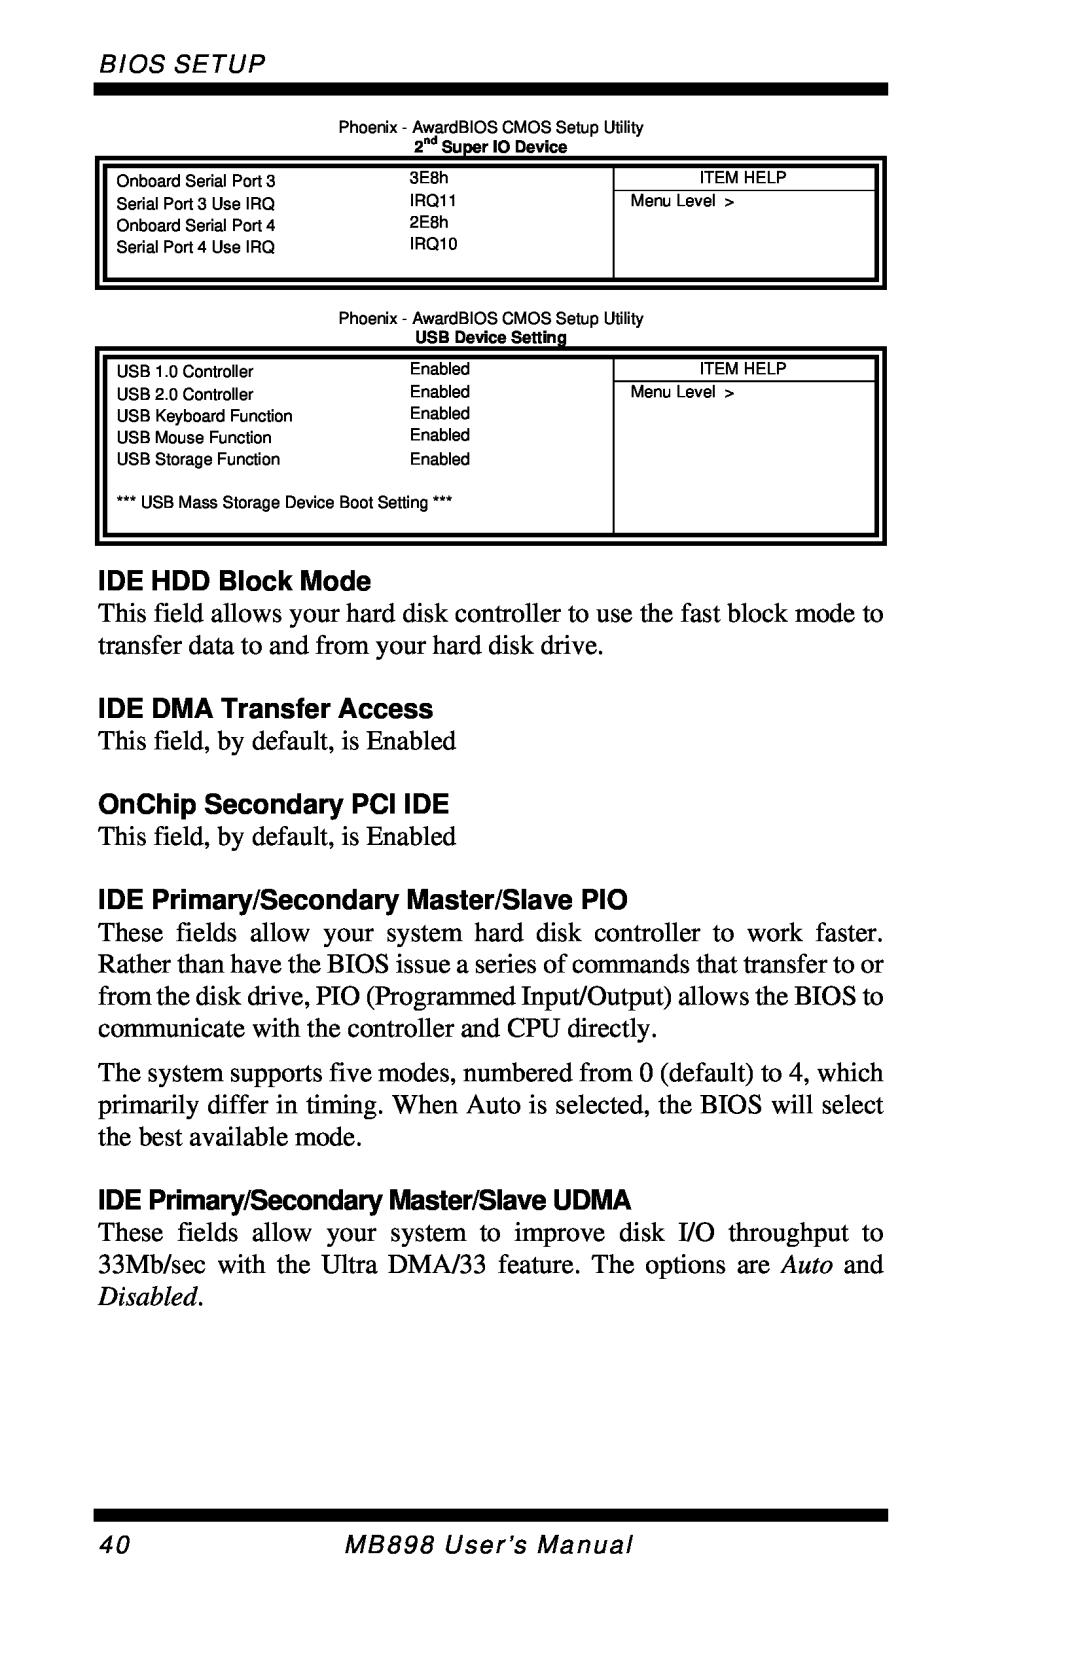 Intel MB898F IDE HDD Block Mode, IDE DMA Transfer Access, OnChip Secondary PCI IDE, IDE Primary/Secondary Master/Slave PIO 